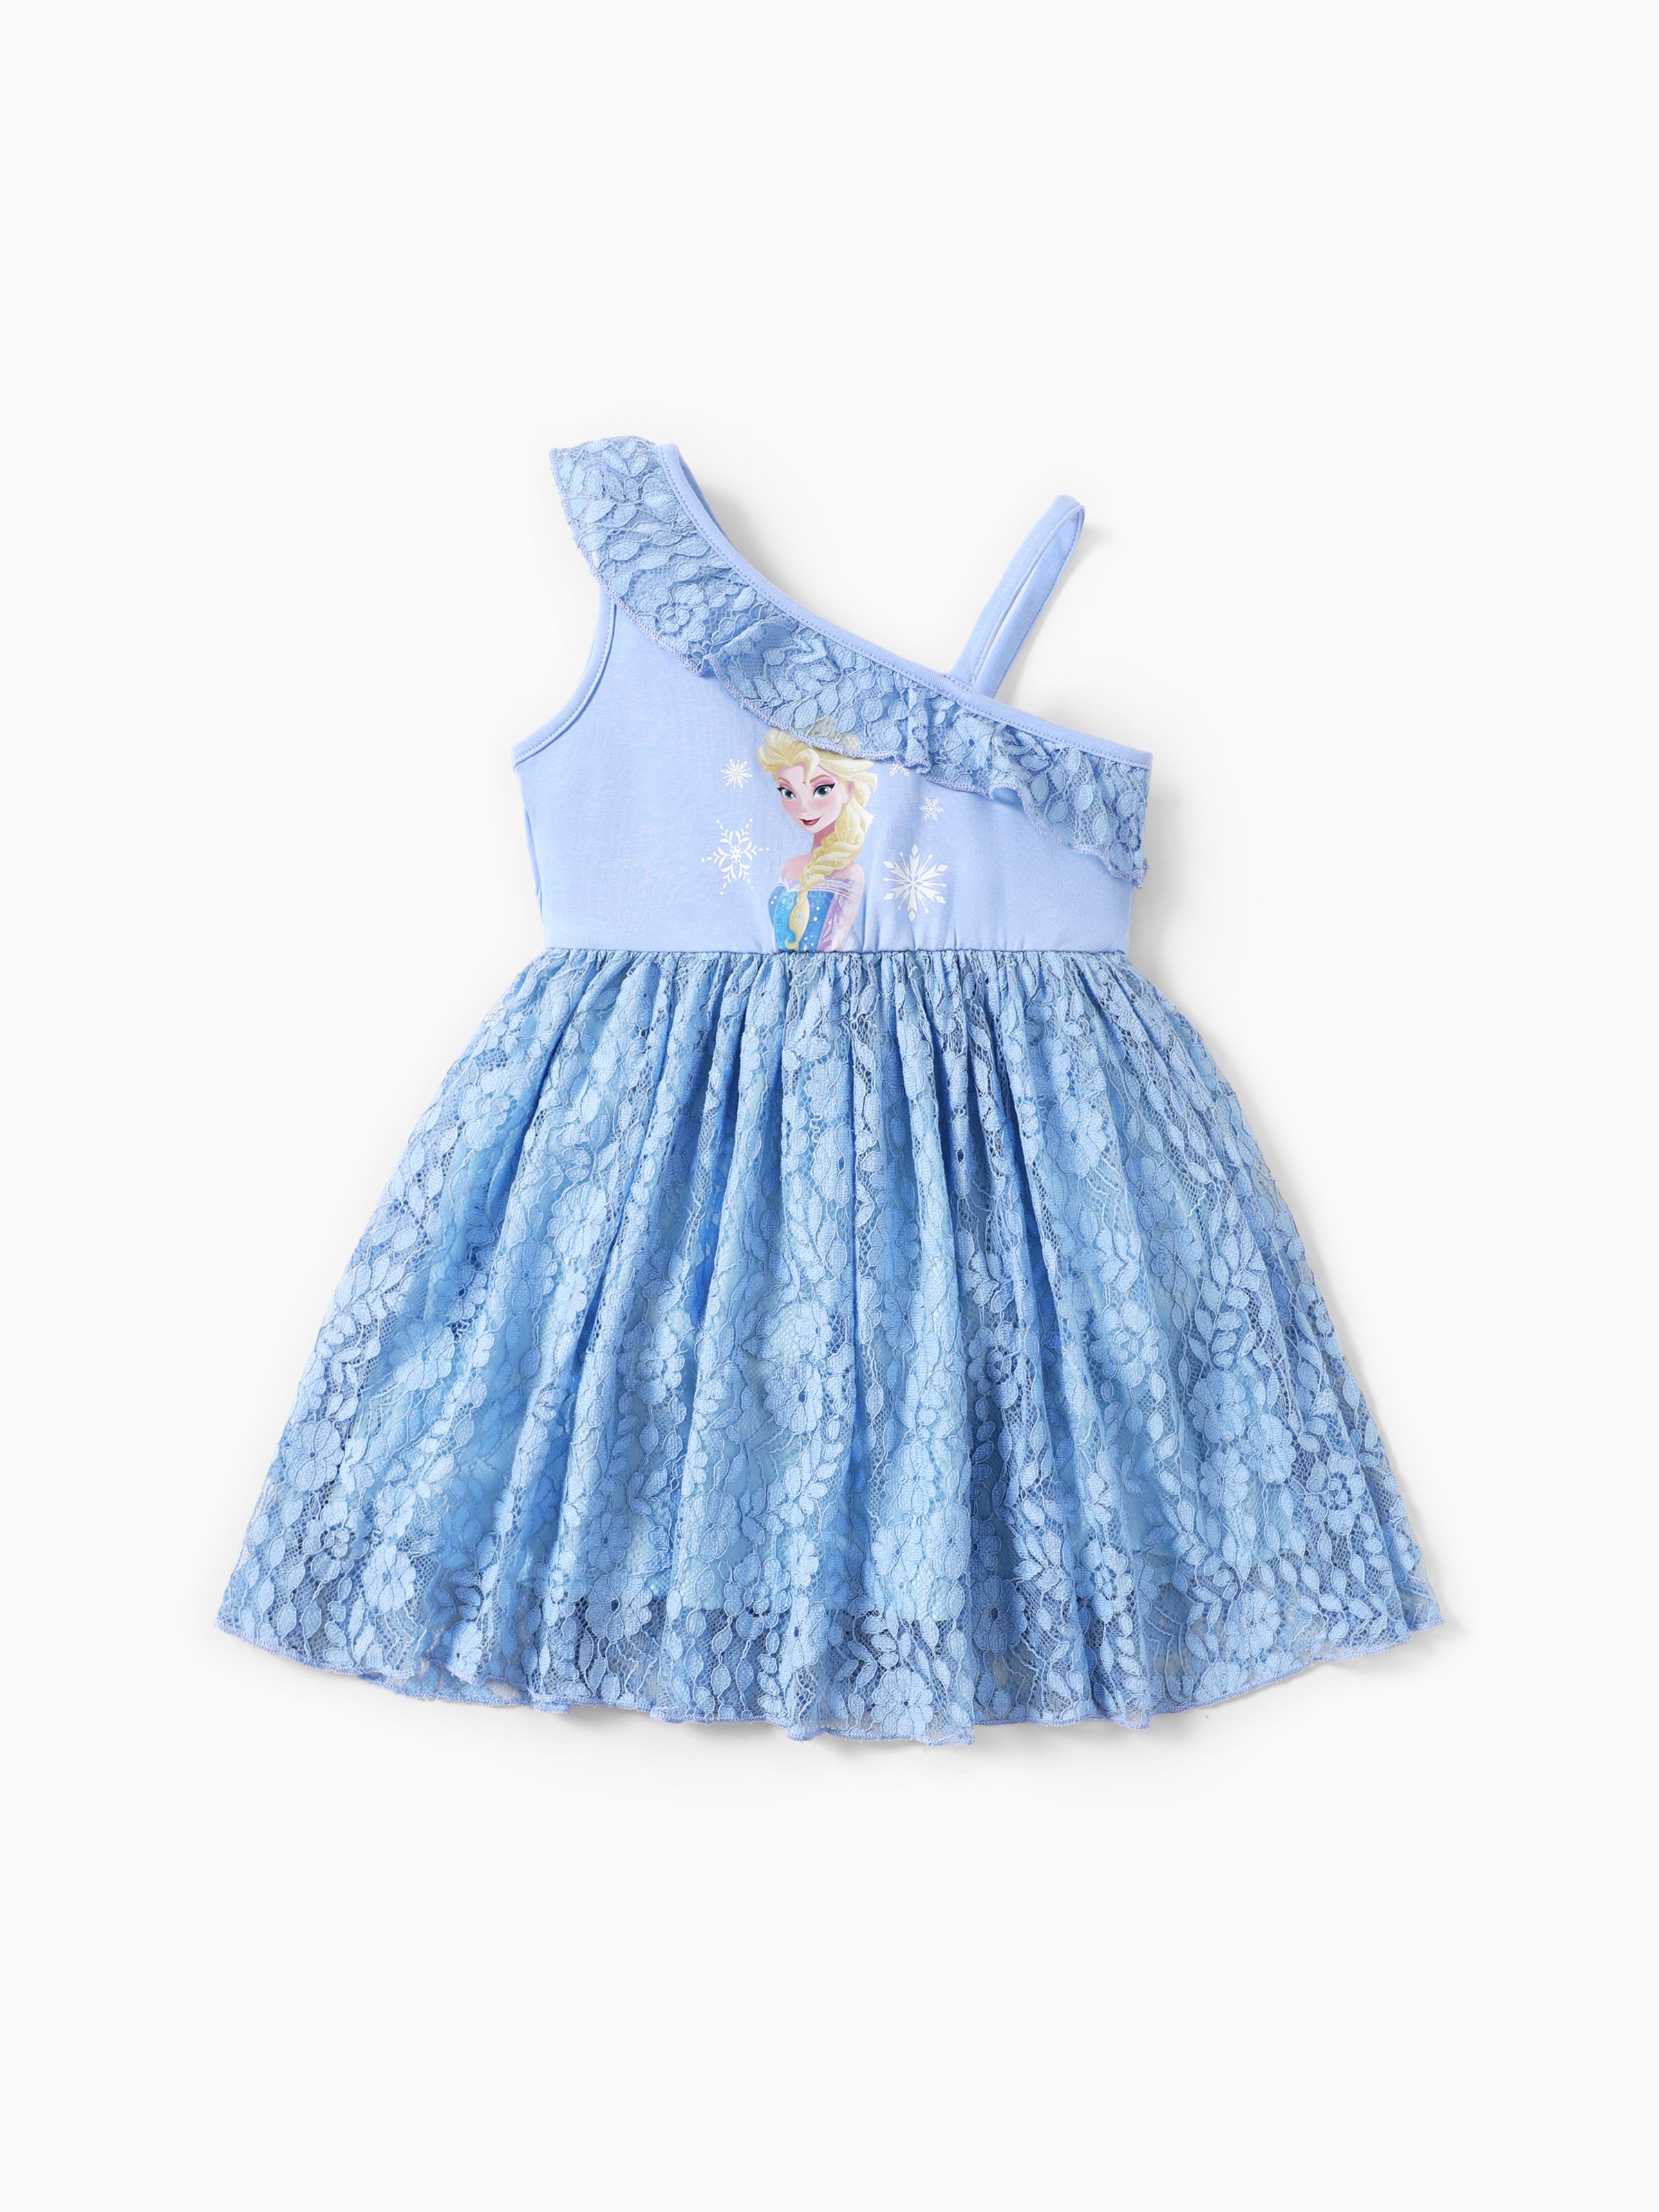 

Disney Frozen Elsa 1pc Toddler Girl Character Print Dress